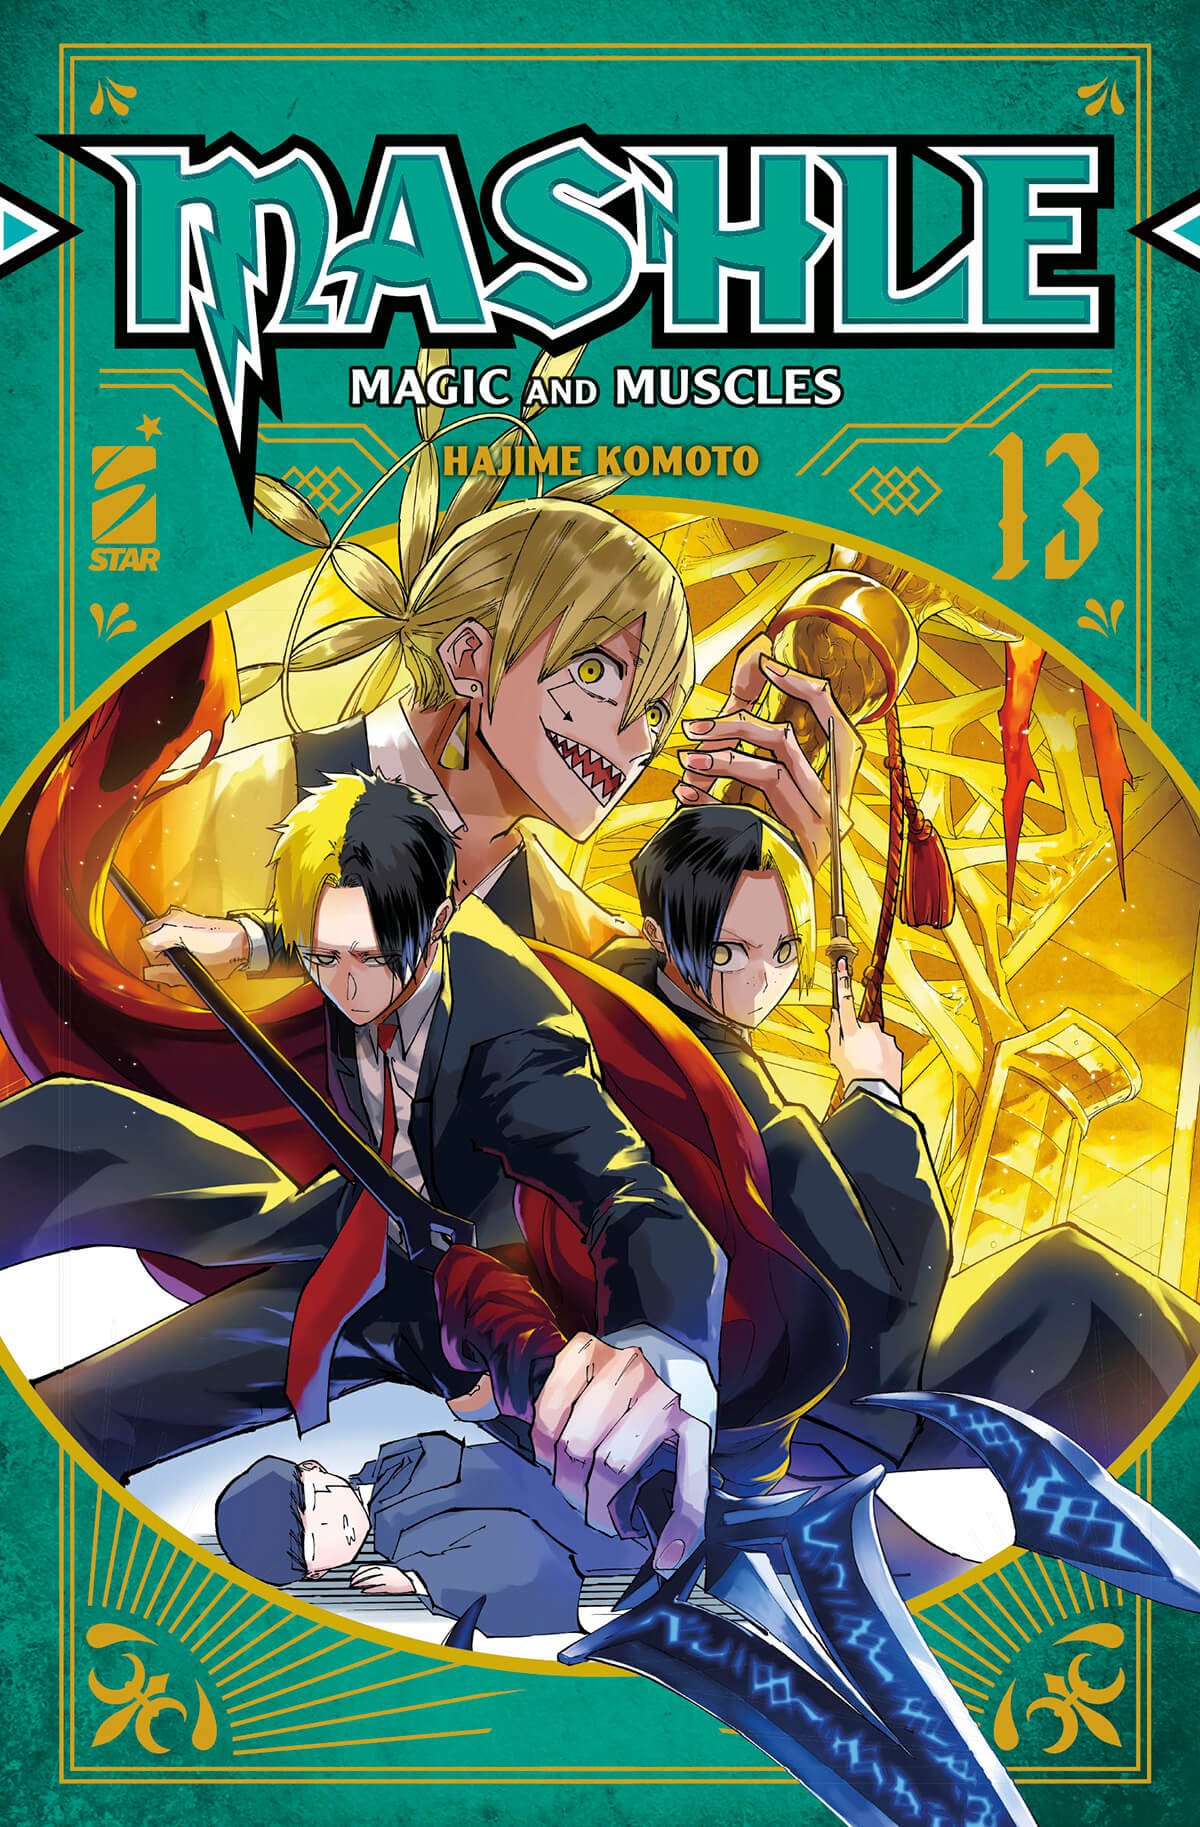 Mashle 13, parmi les sorties mangas Star Comics du 25 octobre 2023.